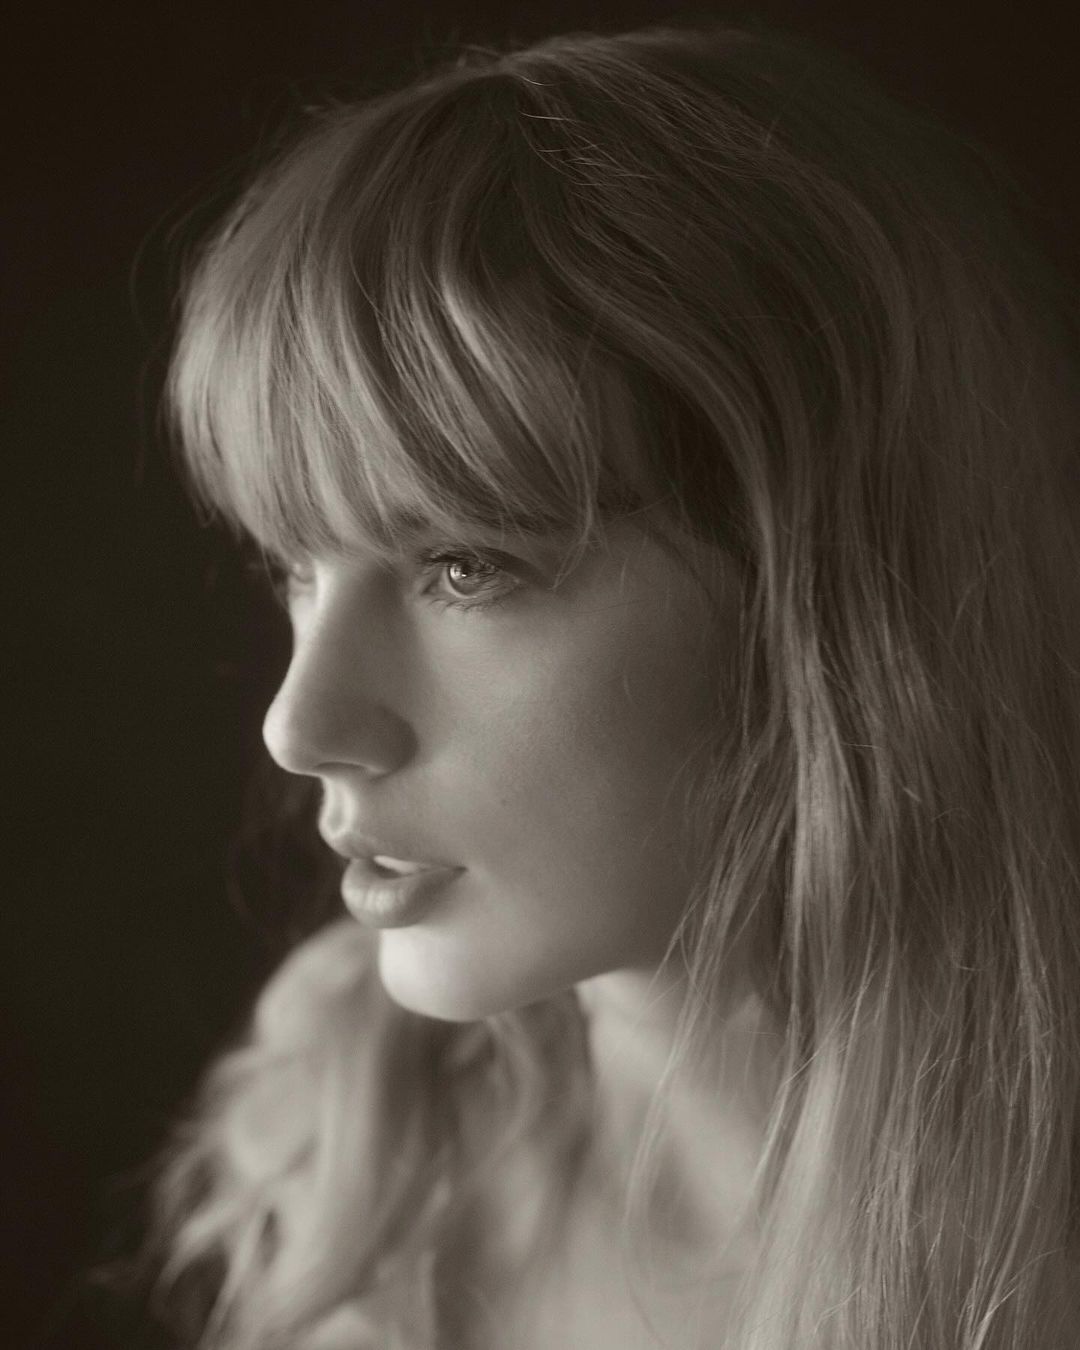 Swift welcomes a new era through her 11th studio album